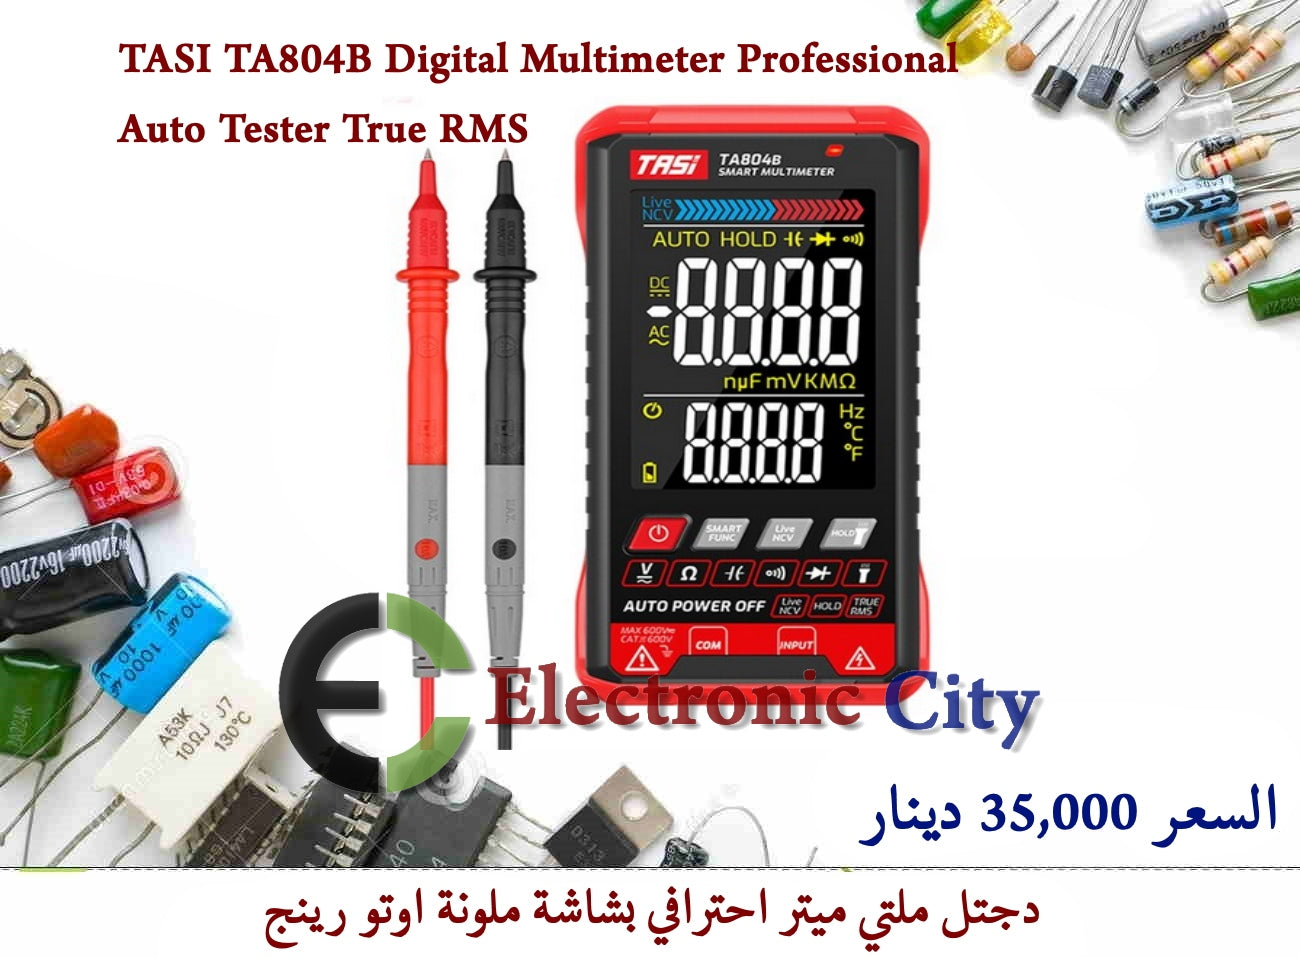 TASI TA804B Digital Multimeter Professional Auto Tester True RMS